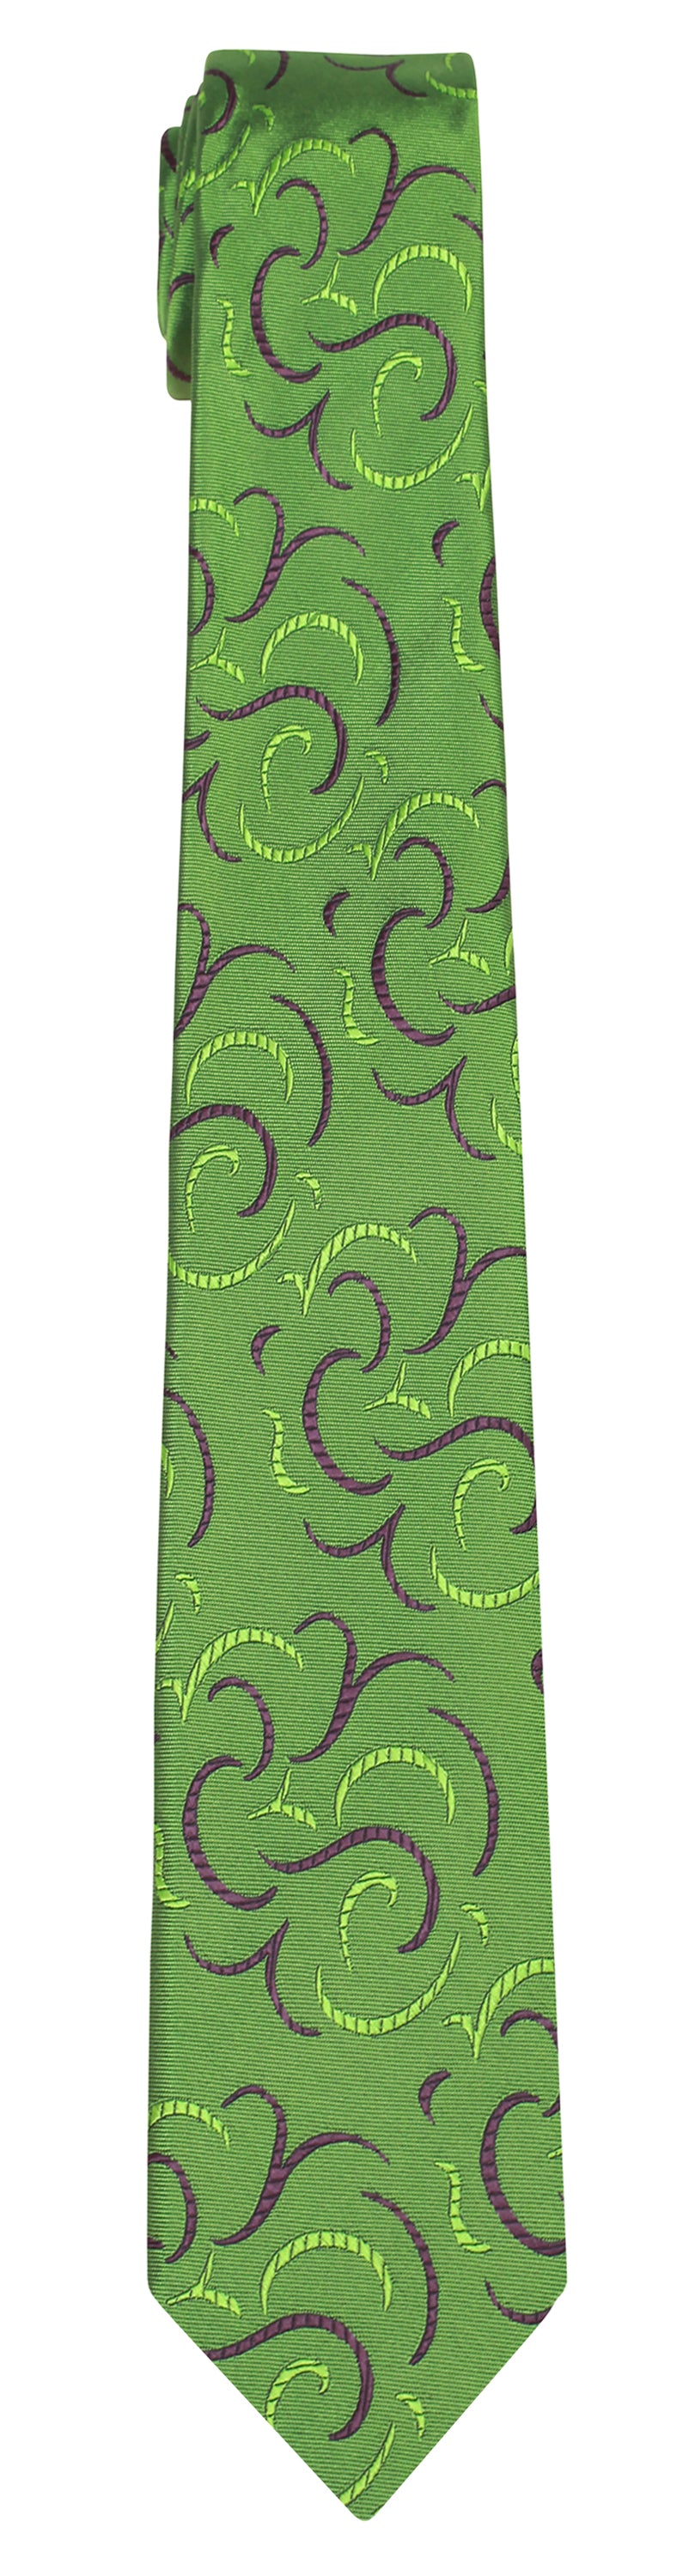 Mimi Fong Silhouette Tie in Jade